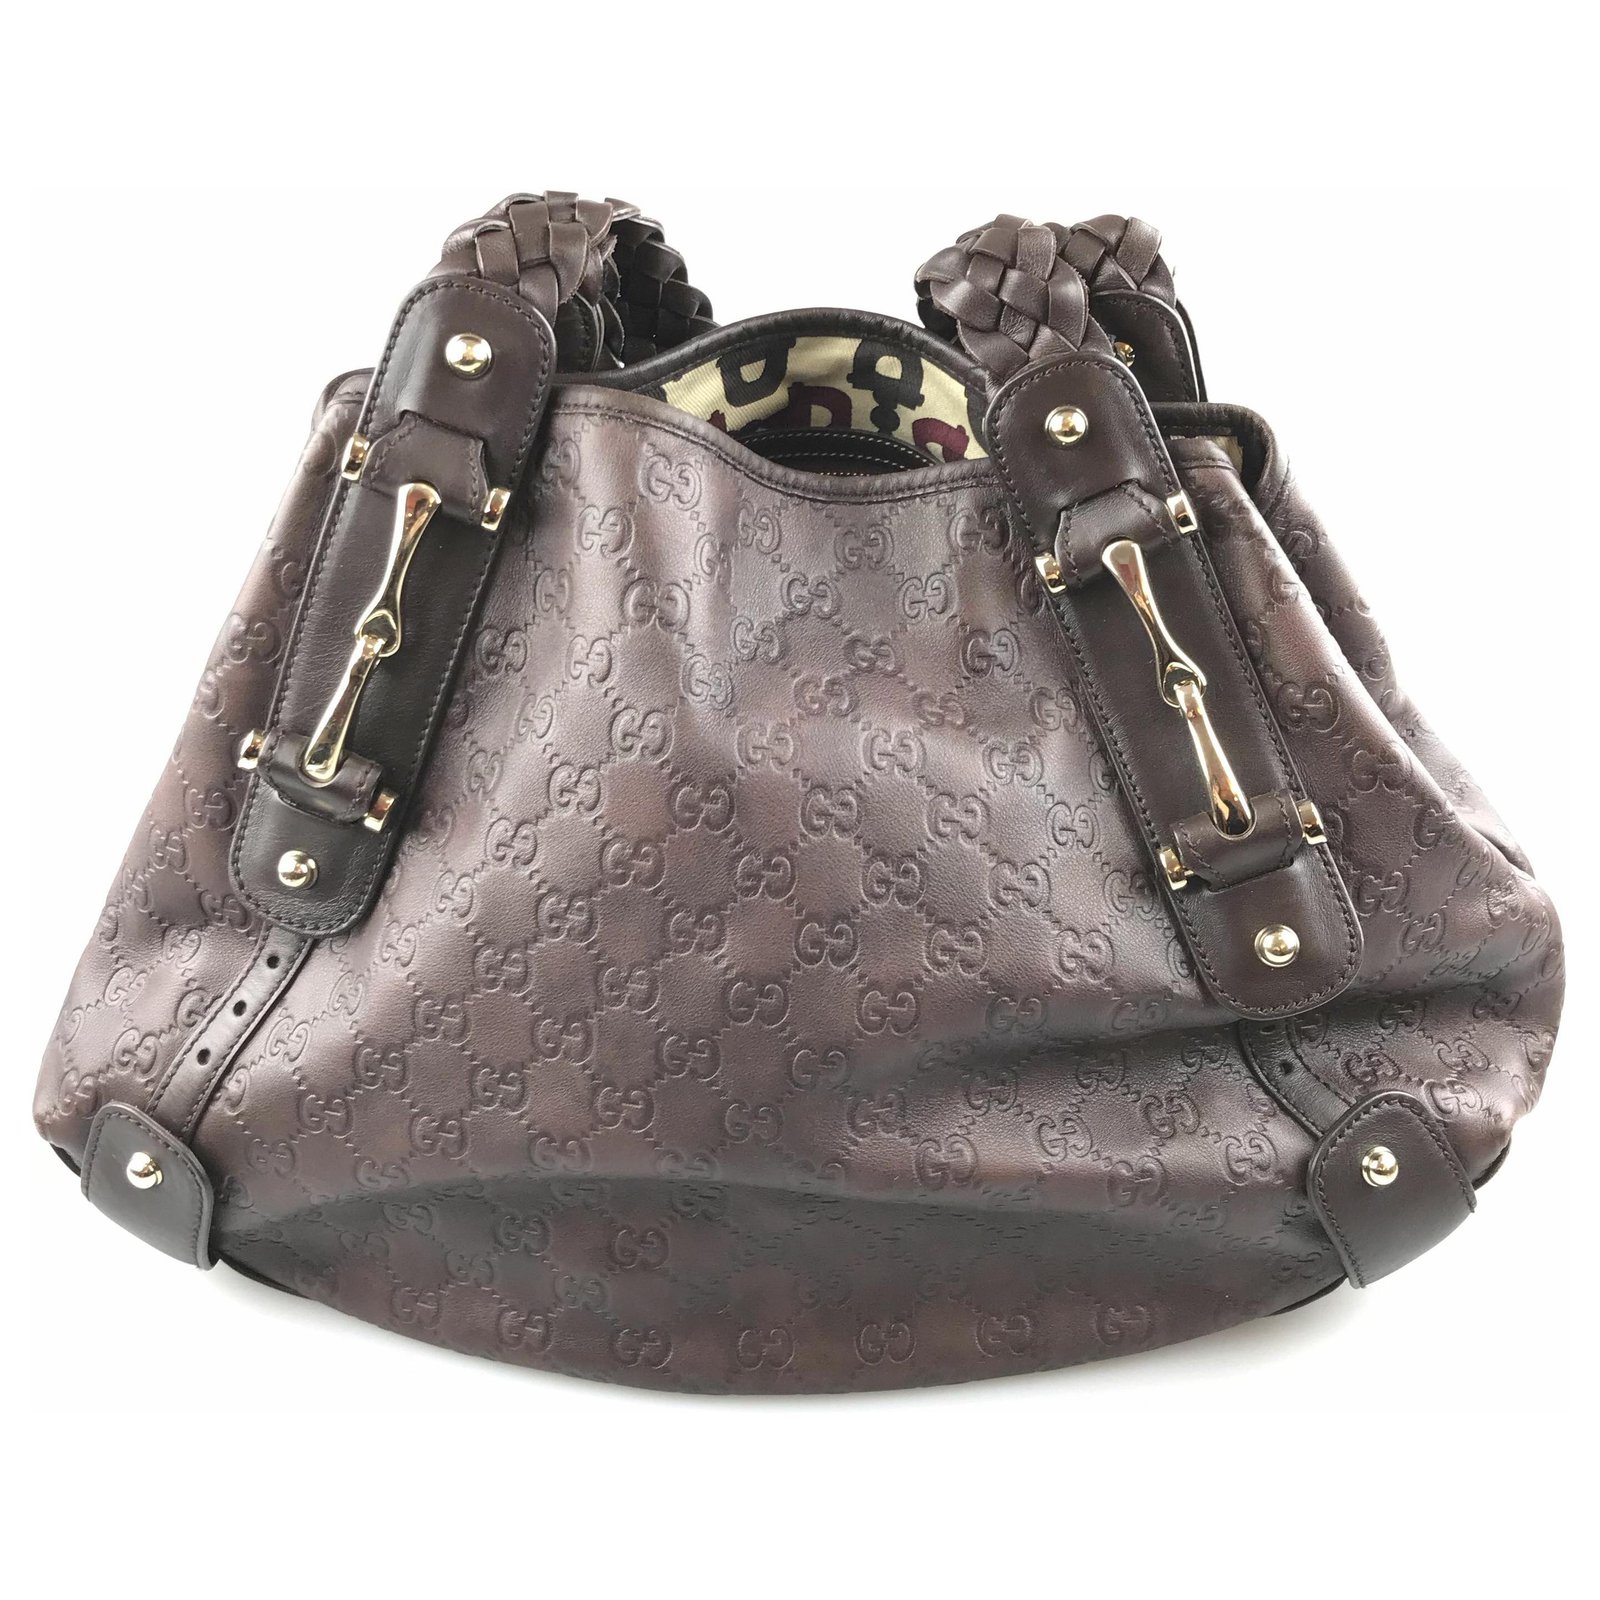 gucci pelham bag with braided straps handbag